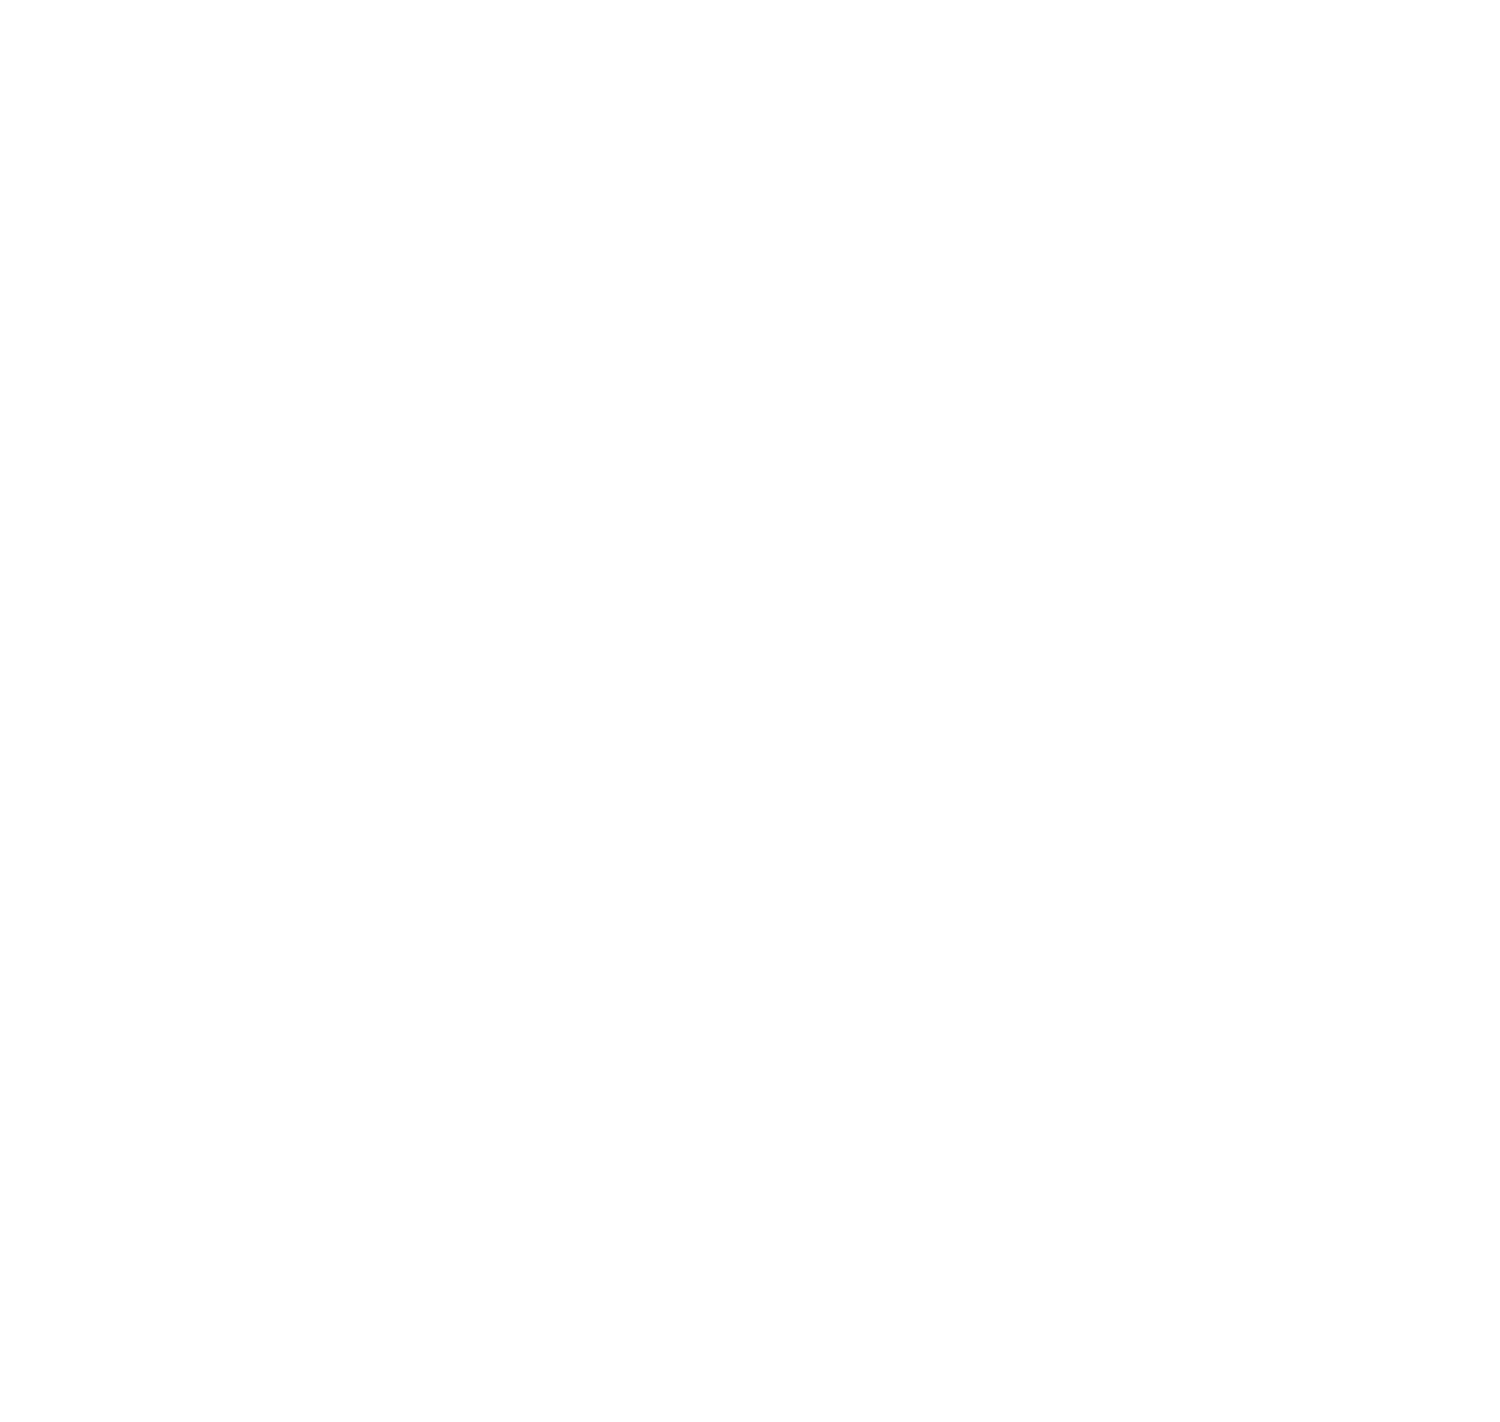 Jesus Burgers